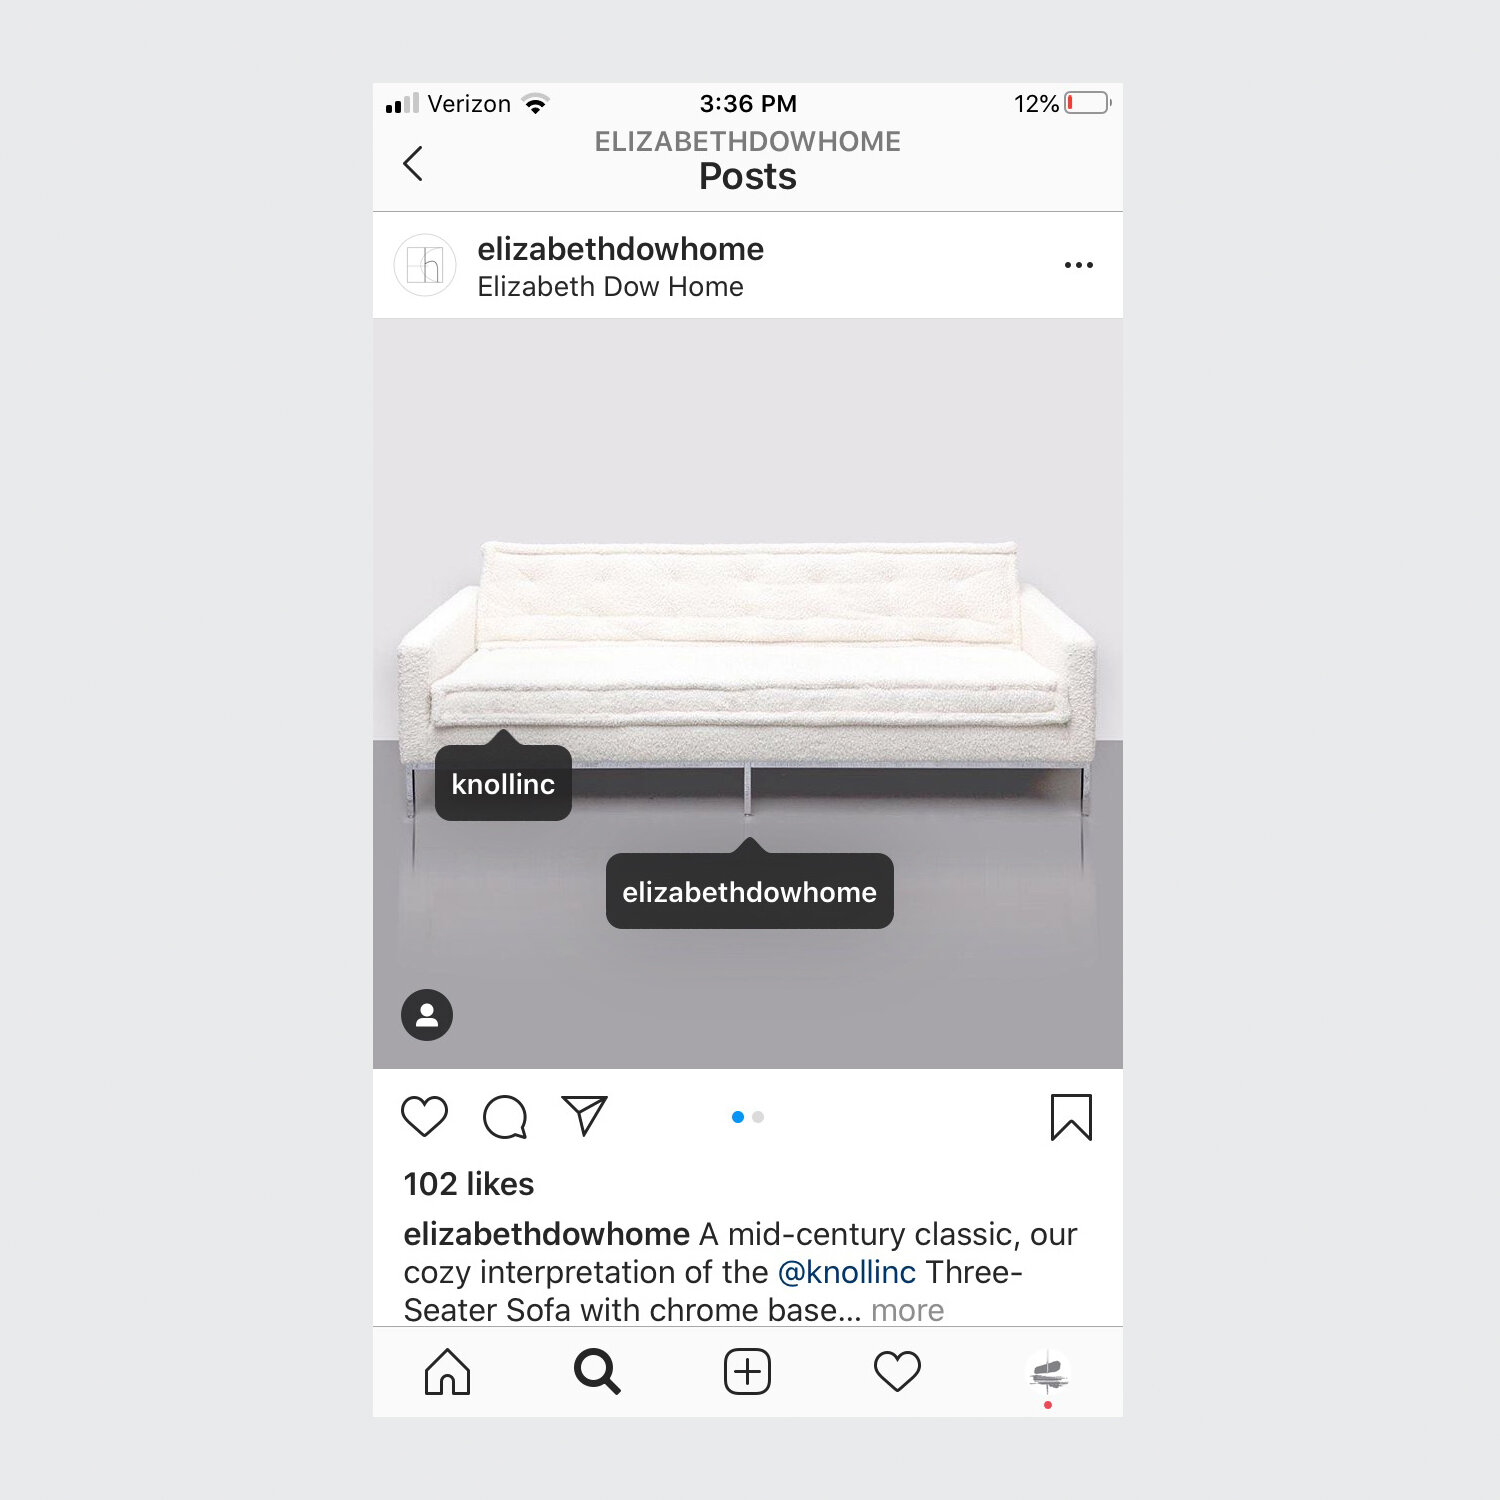  ELIZABETH DOW HOME Instagram product post 